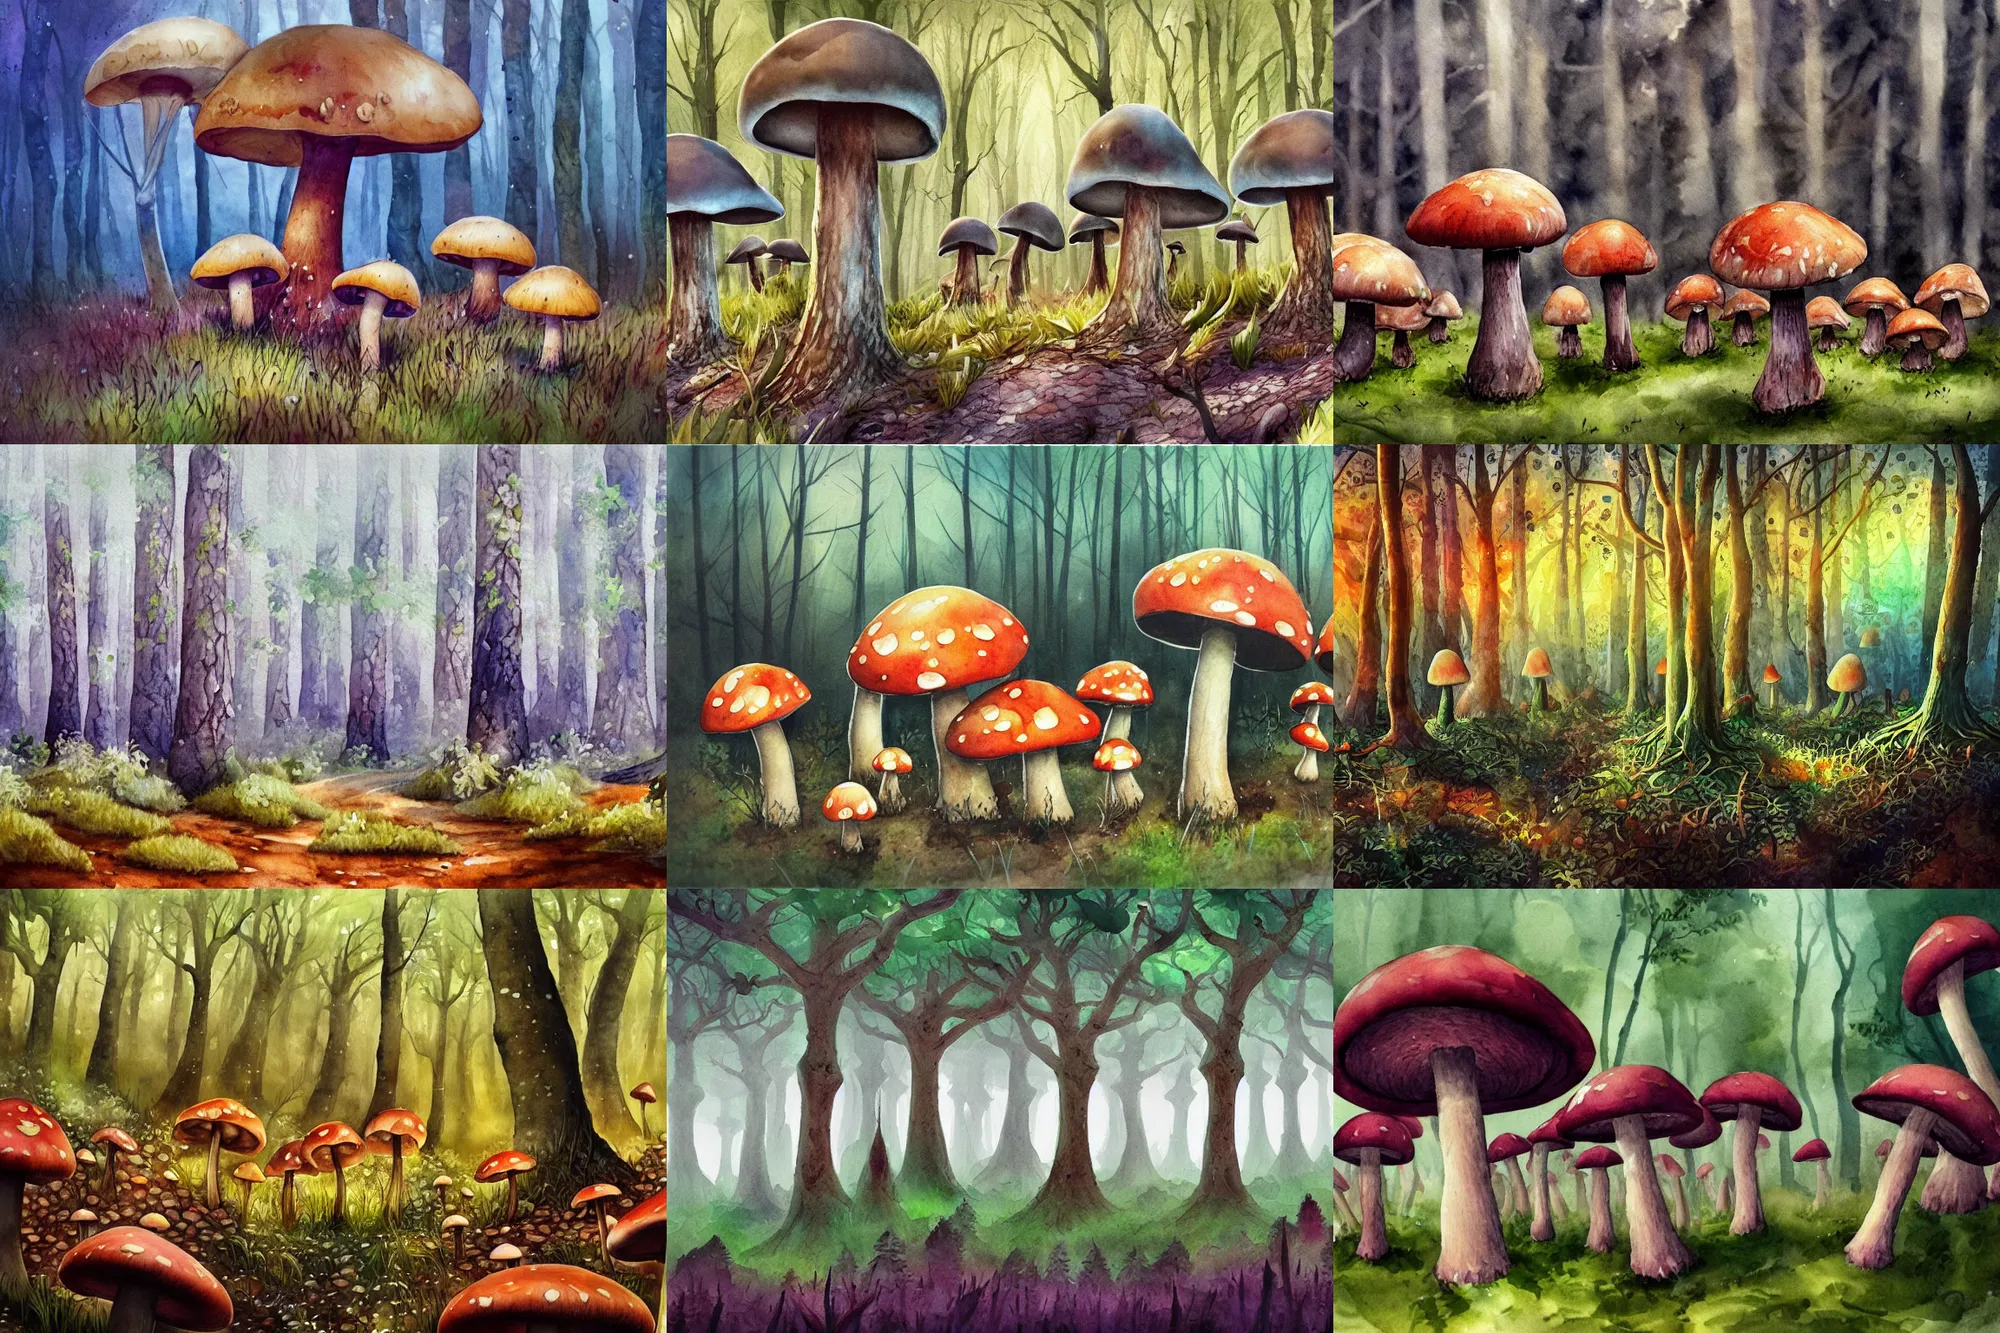 Prompt: Mushroom forest, high quality watercolors, award winning, trending on ArtStation